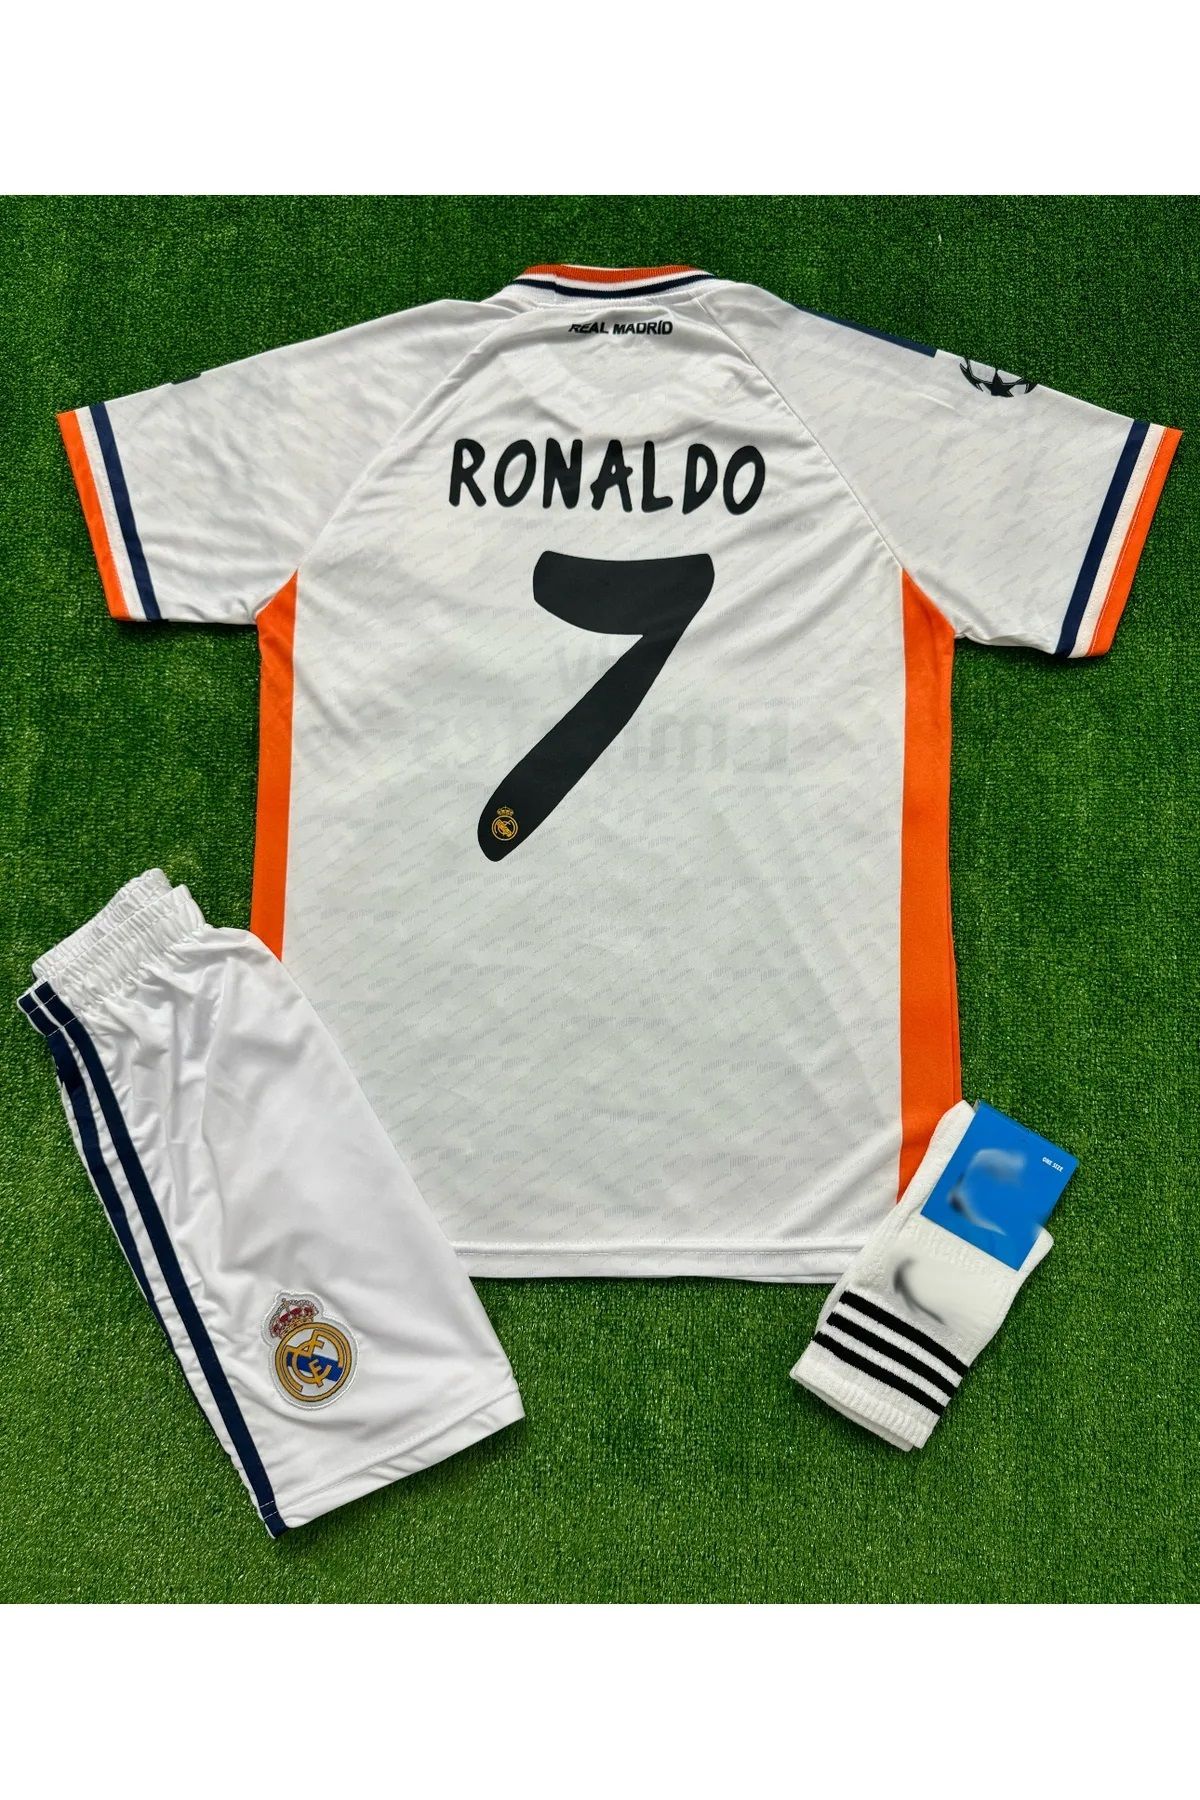 yenteks Real Madrid Ronaldo 2014 Lisbon Retro Çocuk Beyaz Futbol Forması 4'lü Set Aly2110